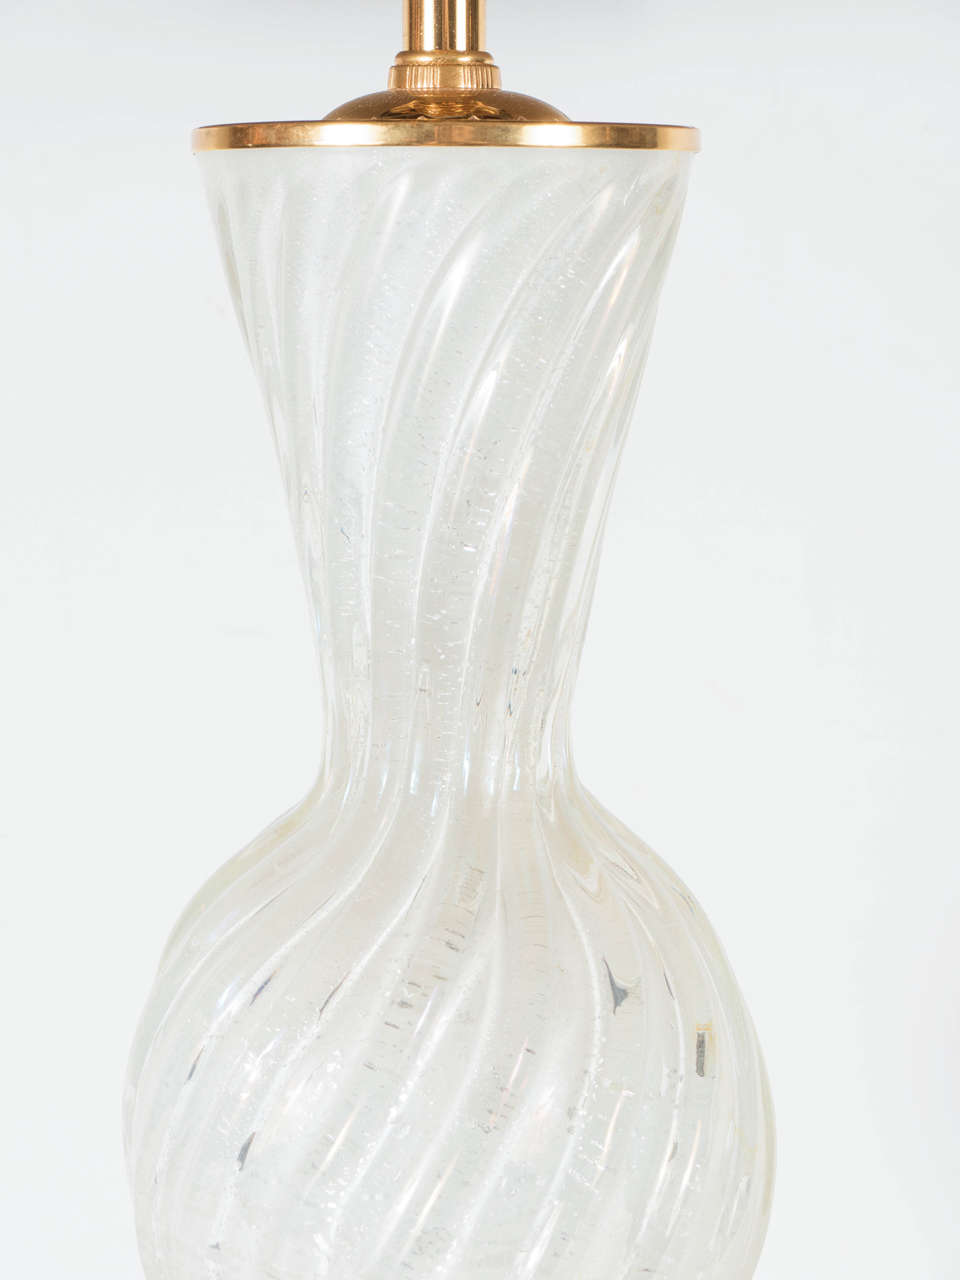 Pair of Mid-Century Modernist Murano Glass Lamps 1